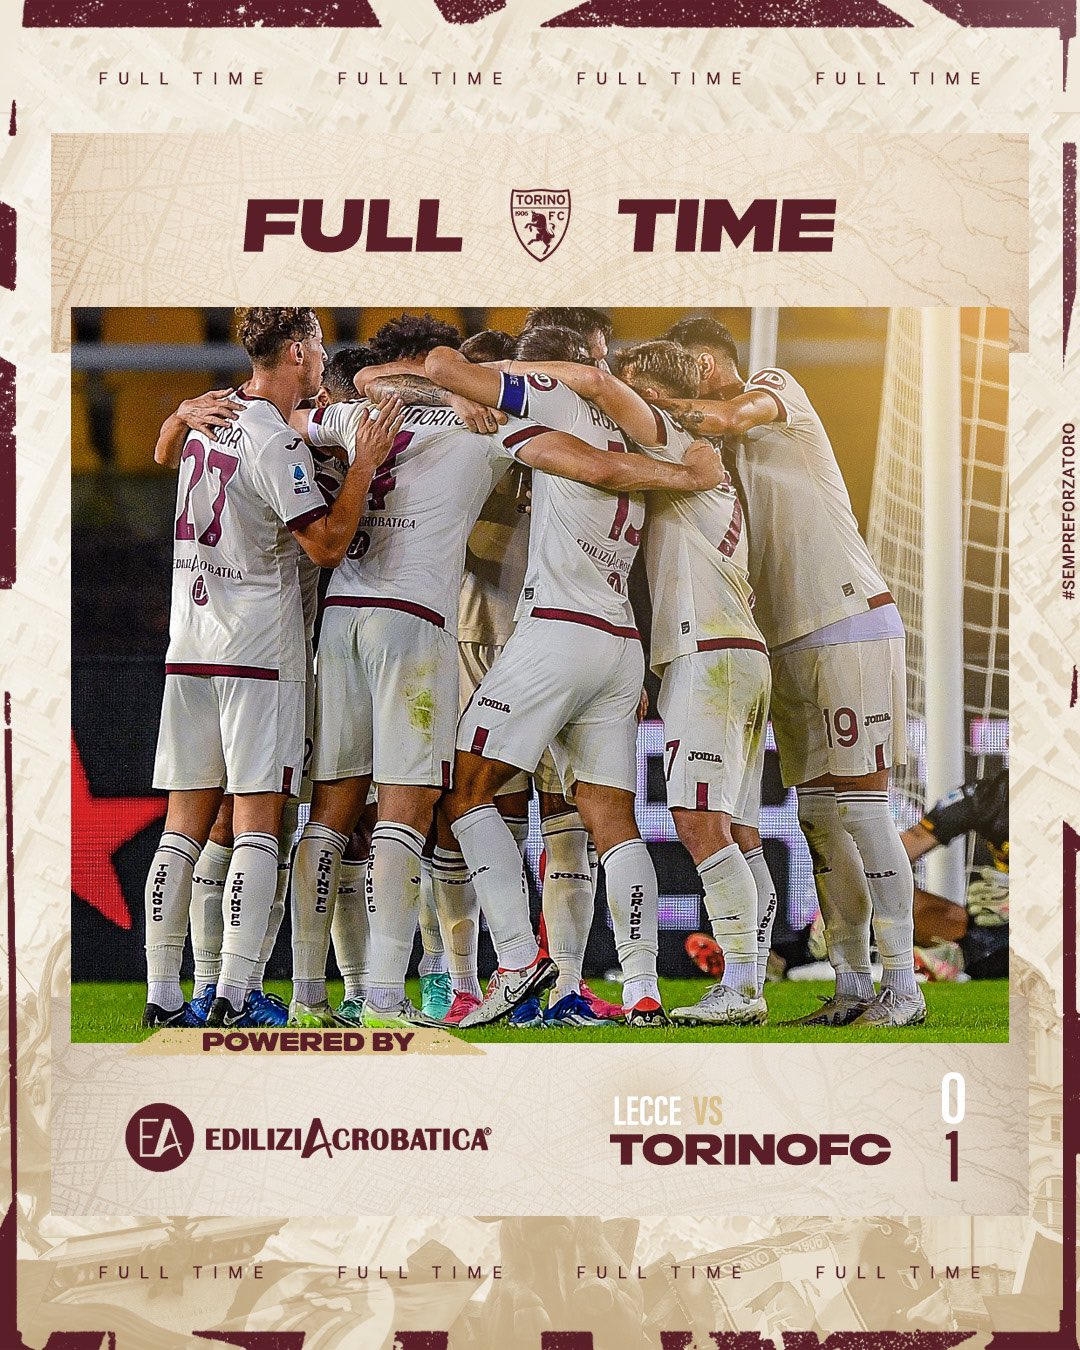 Torino Football Club on X: ℝ𝕒𝕕𝕠 𝕩 𝕋𝕠𝕣𝕚𝕟𝕠 𝔽ℂ #SFT   / X